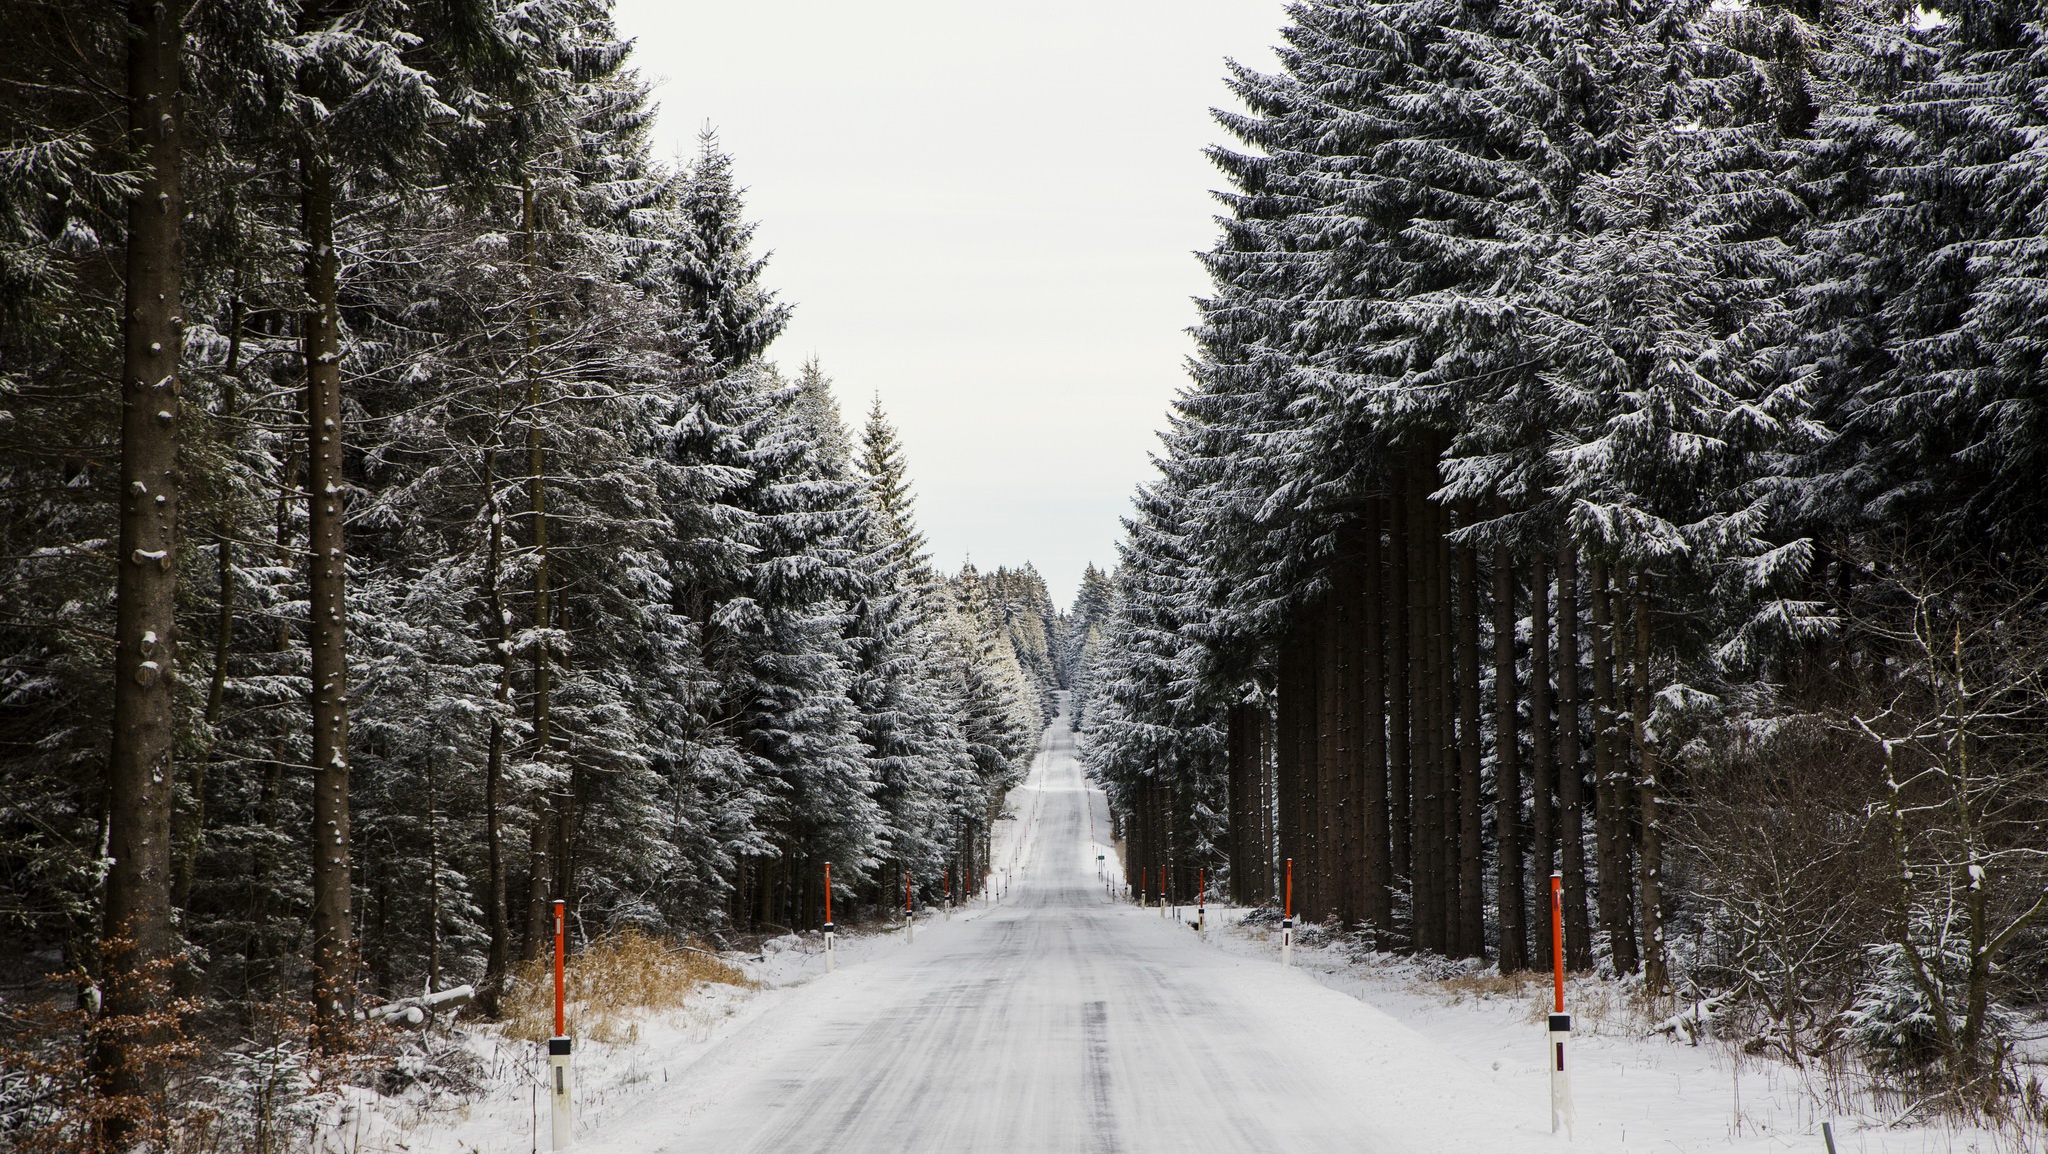 Дорога без снега. Зимняя дорога. Зимняя дорога в лесу. Дорога в зиму сосны. Зимний лес вдоль дороги.